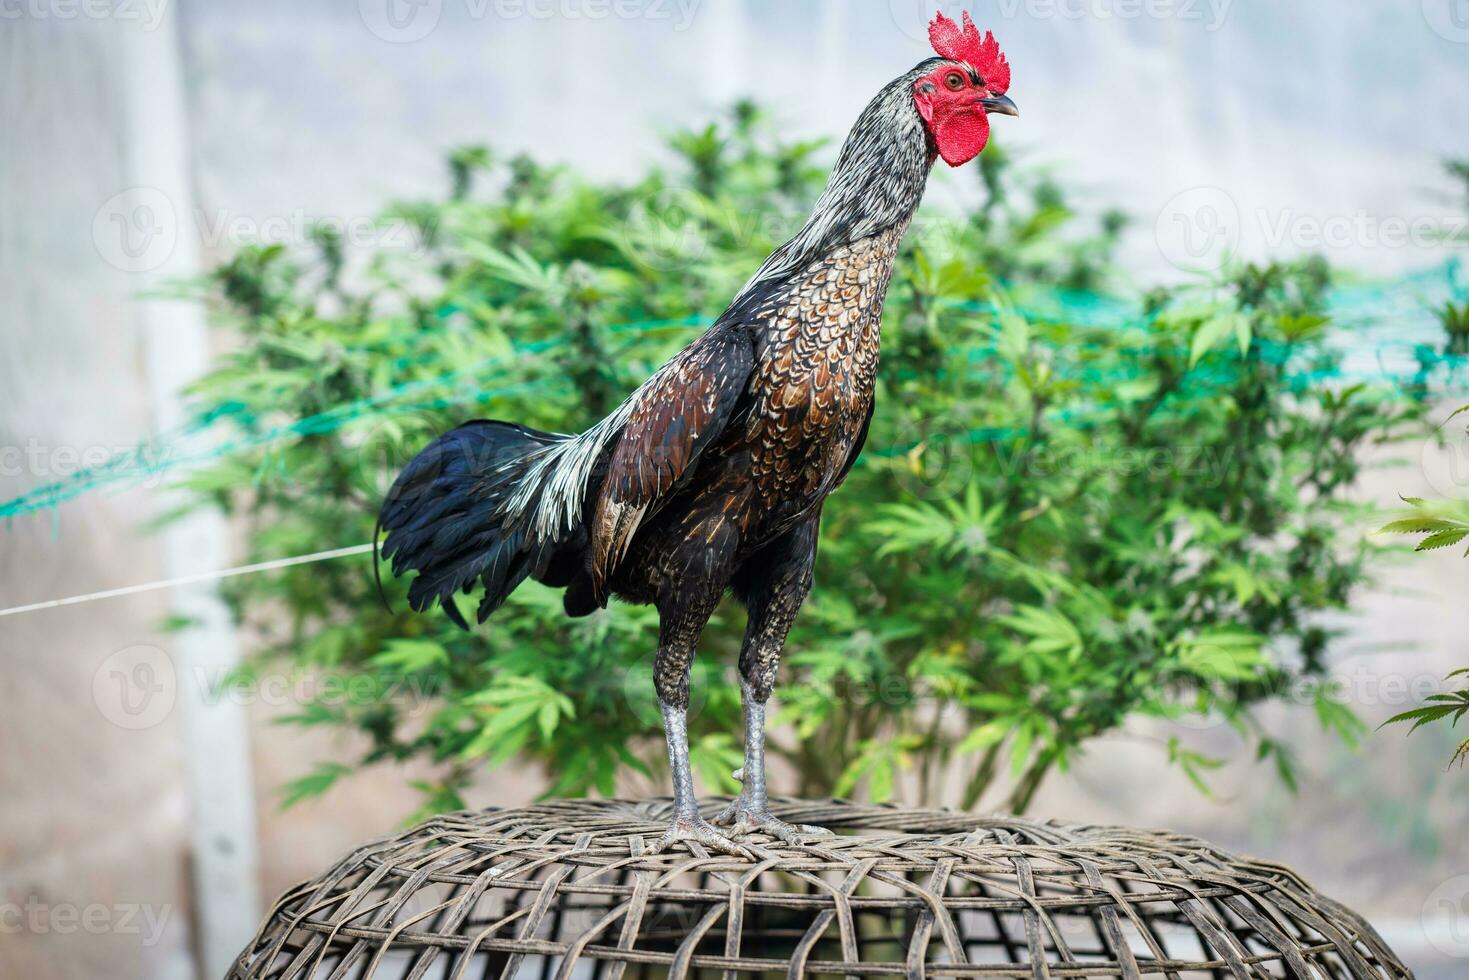 hermosa gallo en pie en borroso naturaleza verde antecedentes. tailandés gallo, tailandés pelea de gallos, pollo de pie. foto